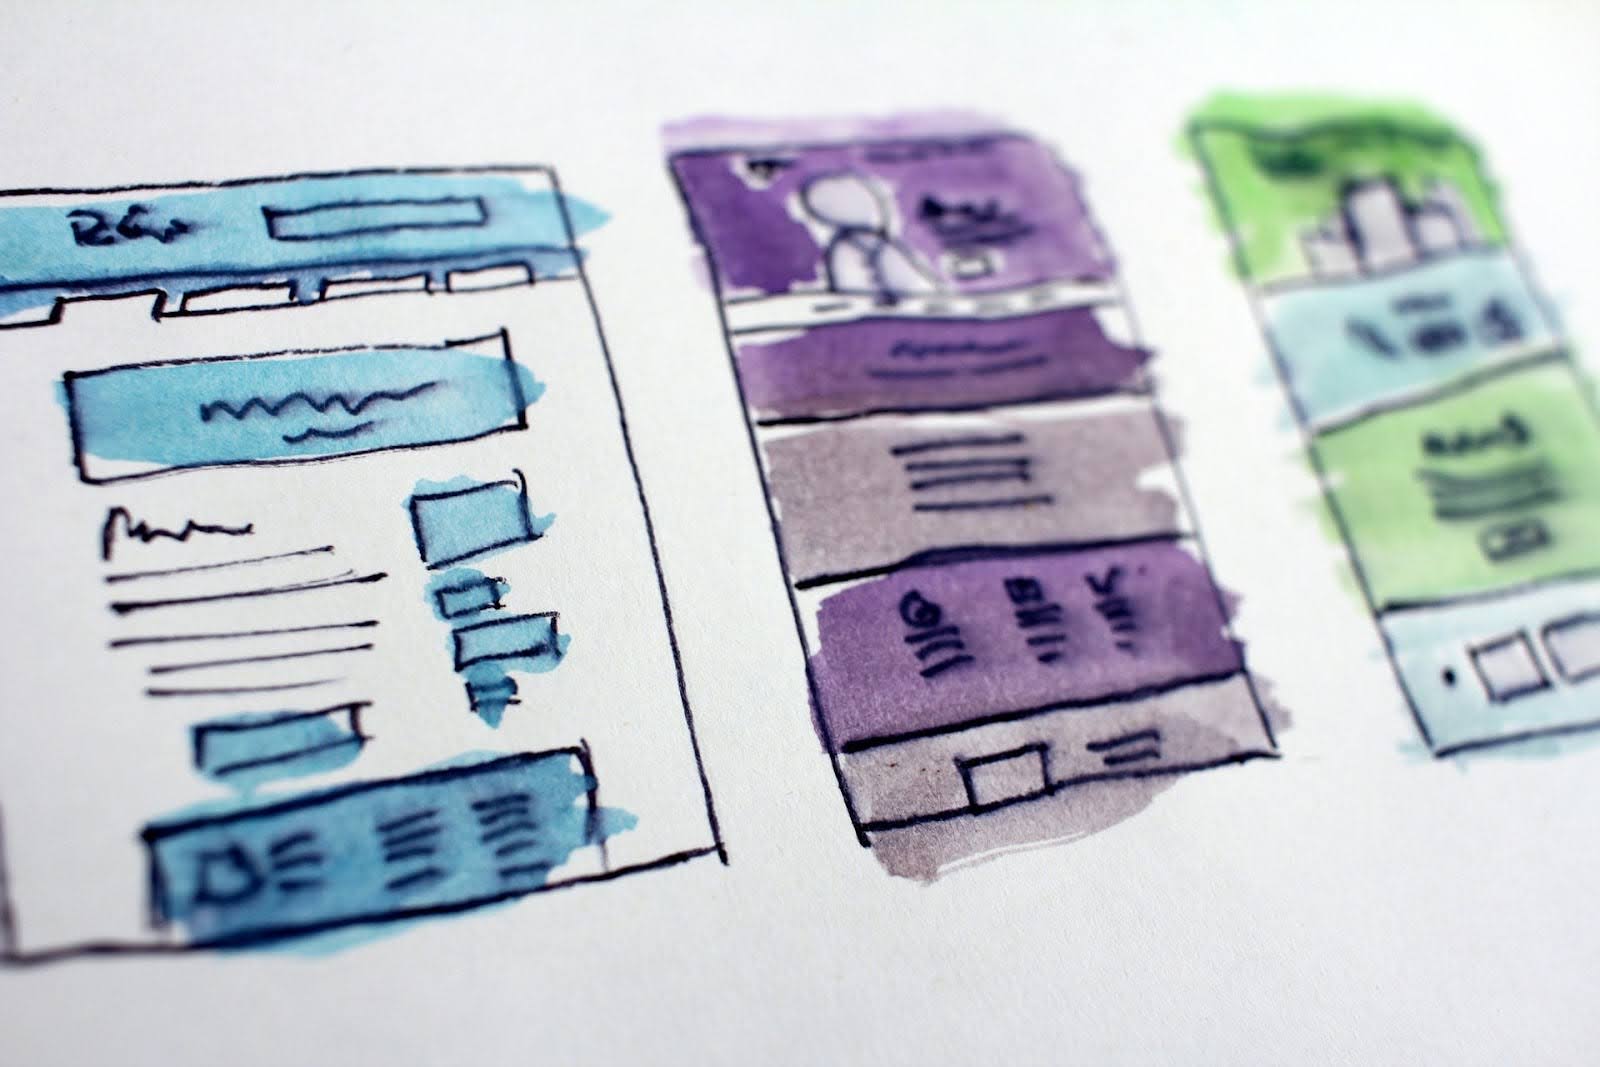 A sketch of three website page designs.